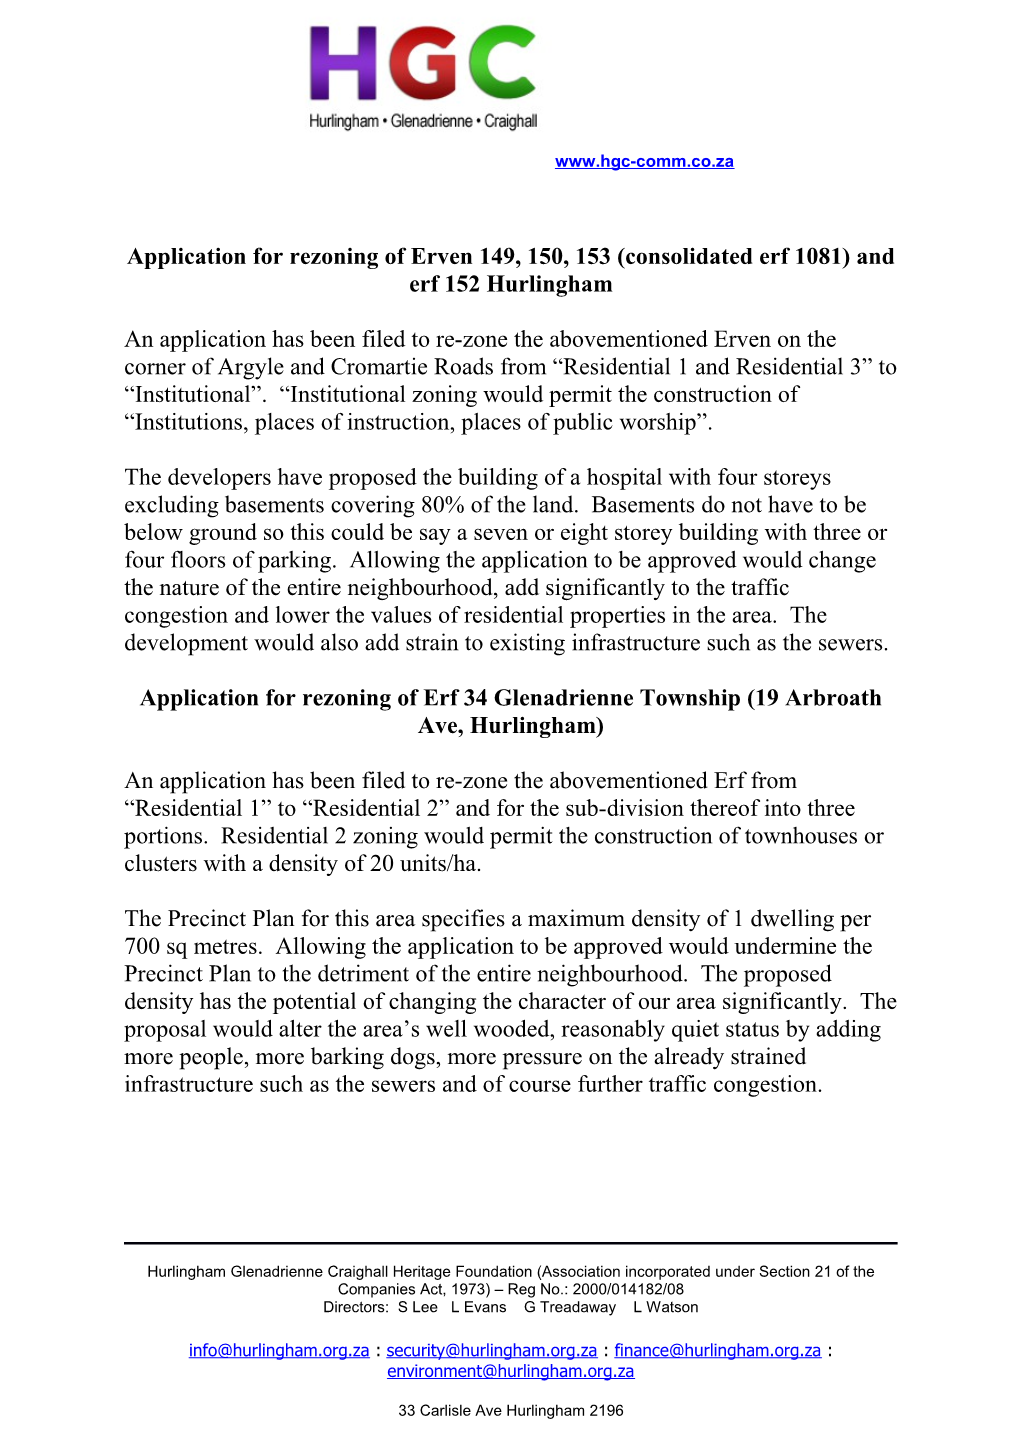 Application for Rezoning of Erven 149, 150,153 (Consolidated Erf 1081) and Erf 152 Hurlingham